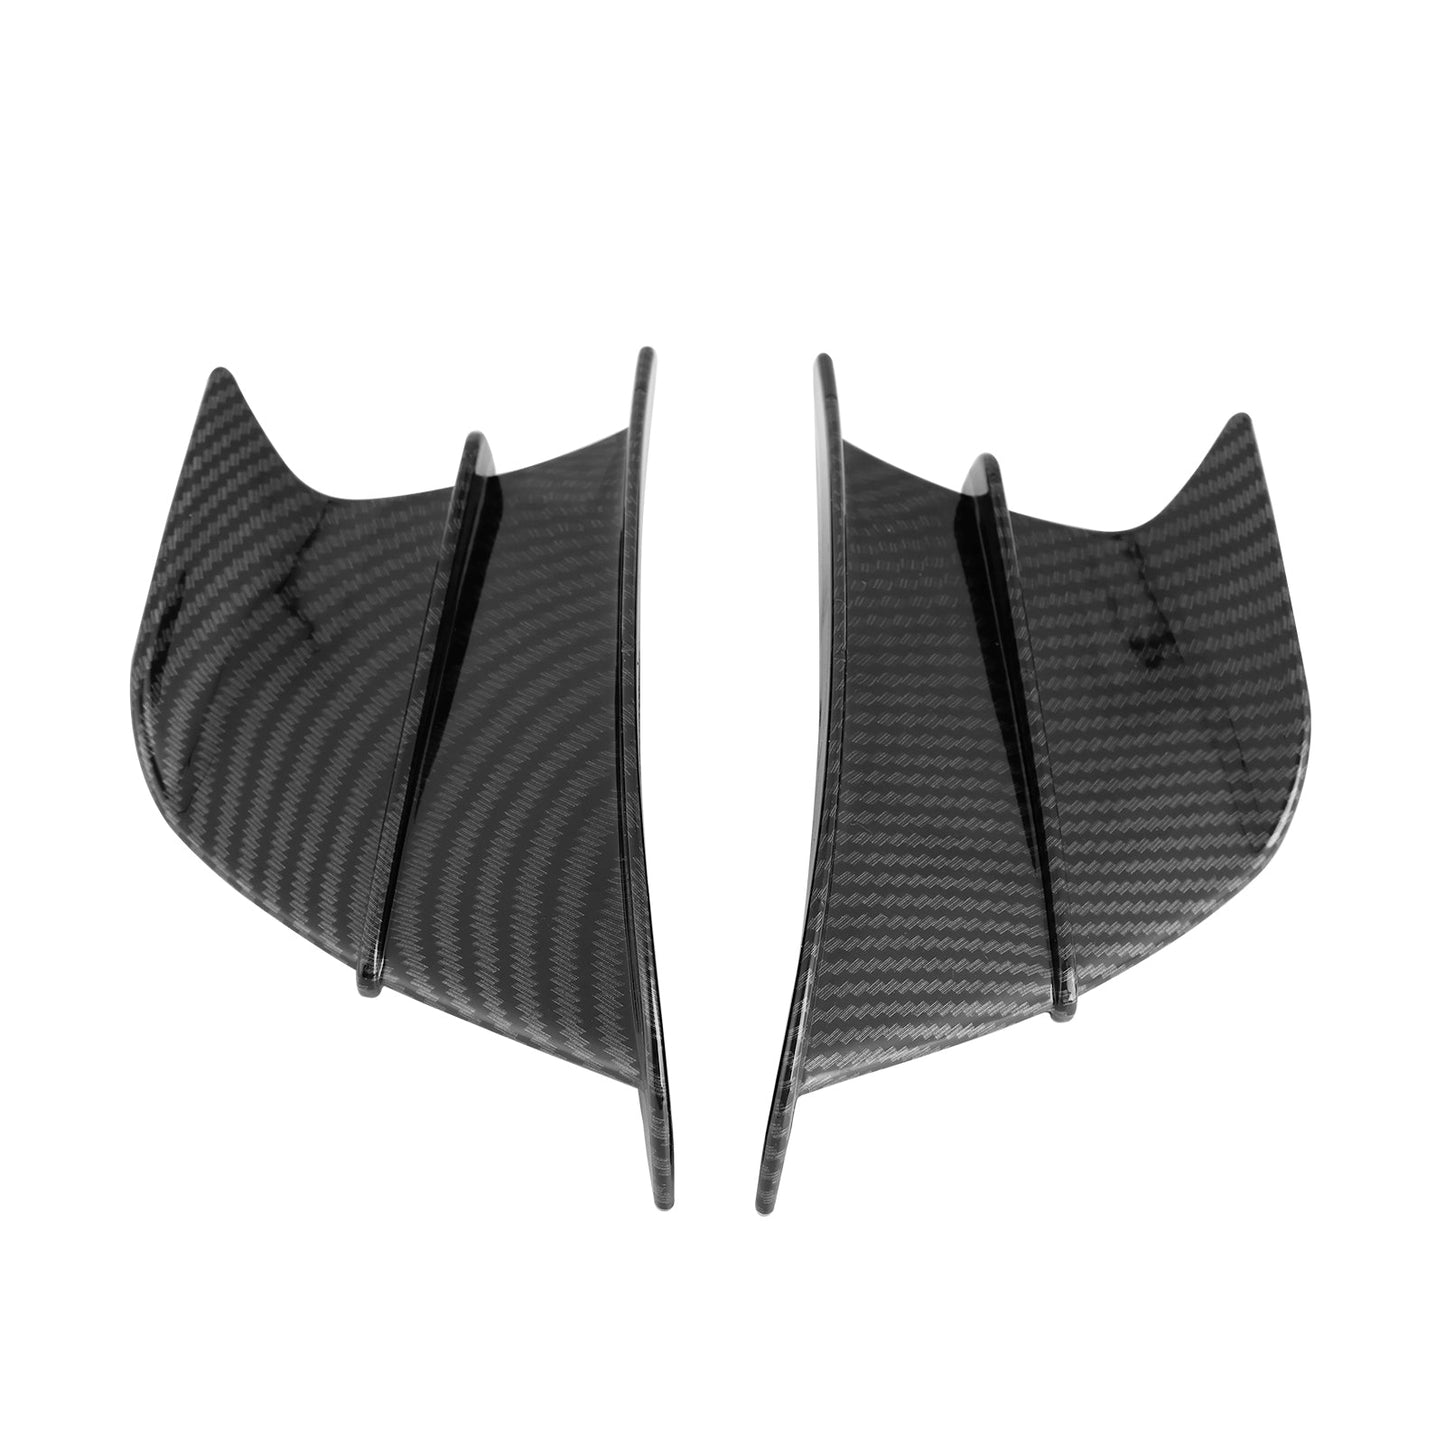 Winglet Wind Fin Aerodynamic Kit Spoiler Trim Cover für Motorrad Universal